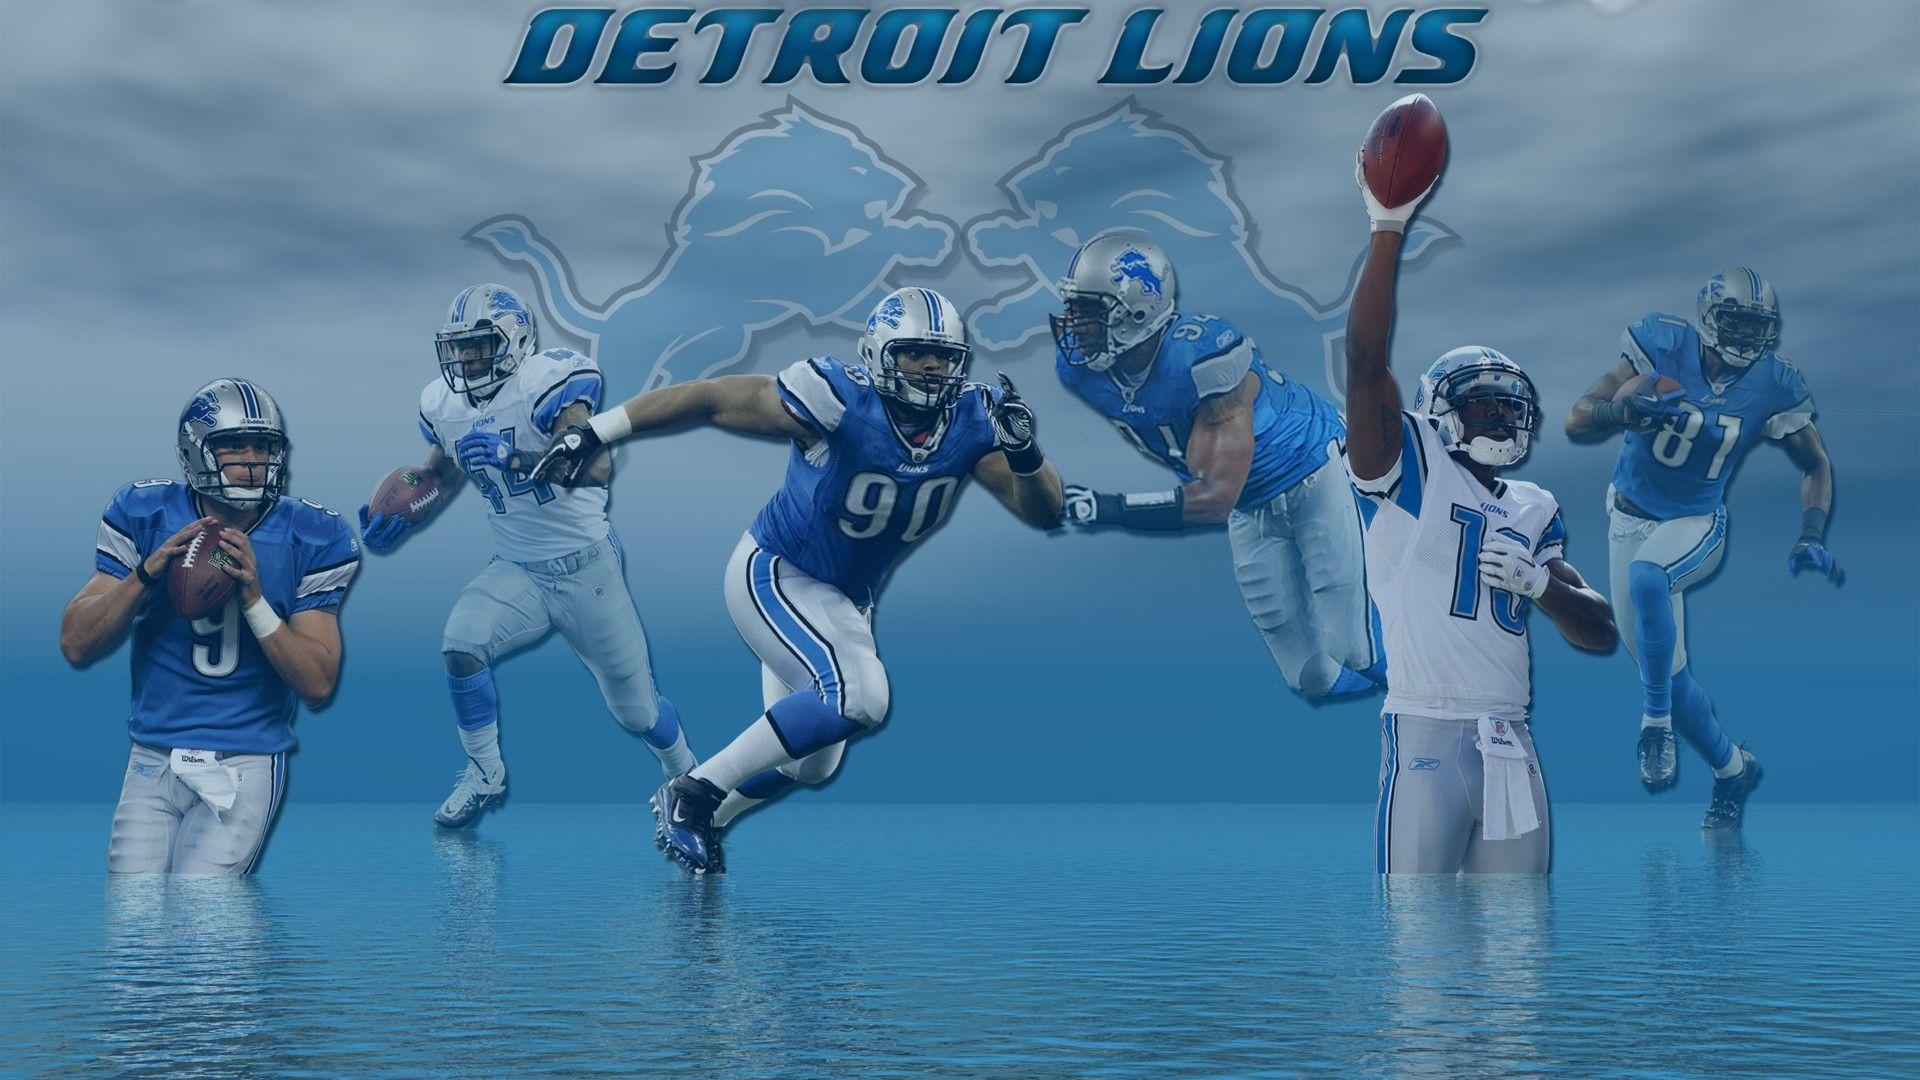 Detroit Lions For PC Wallpaper NFL Football Wallpaper. Detroit lions wallpaper, Detroit lions, Detroit lions football